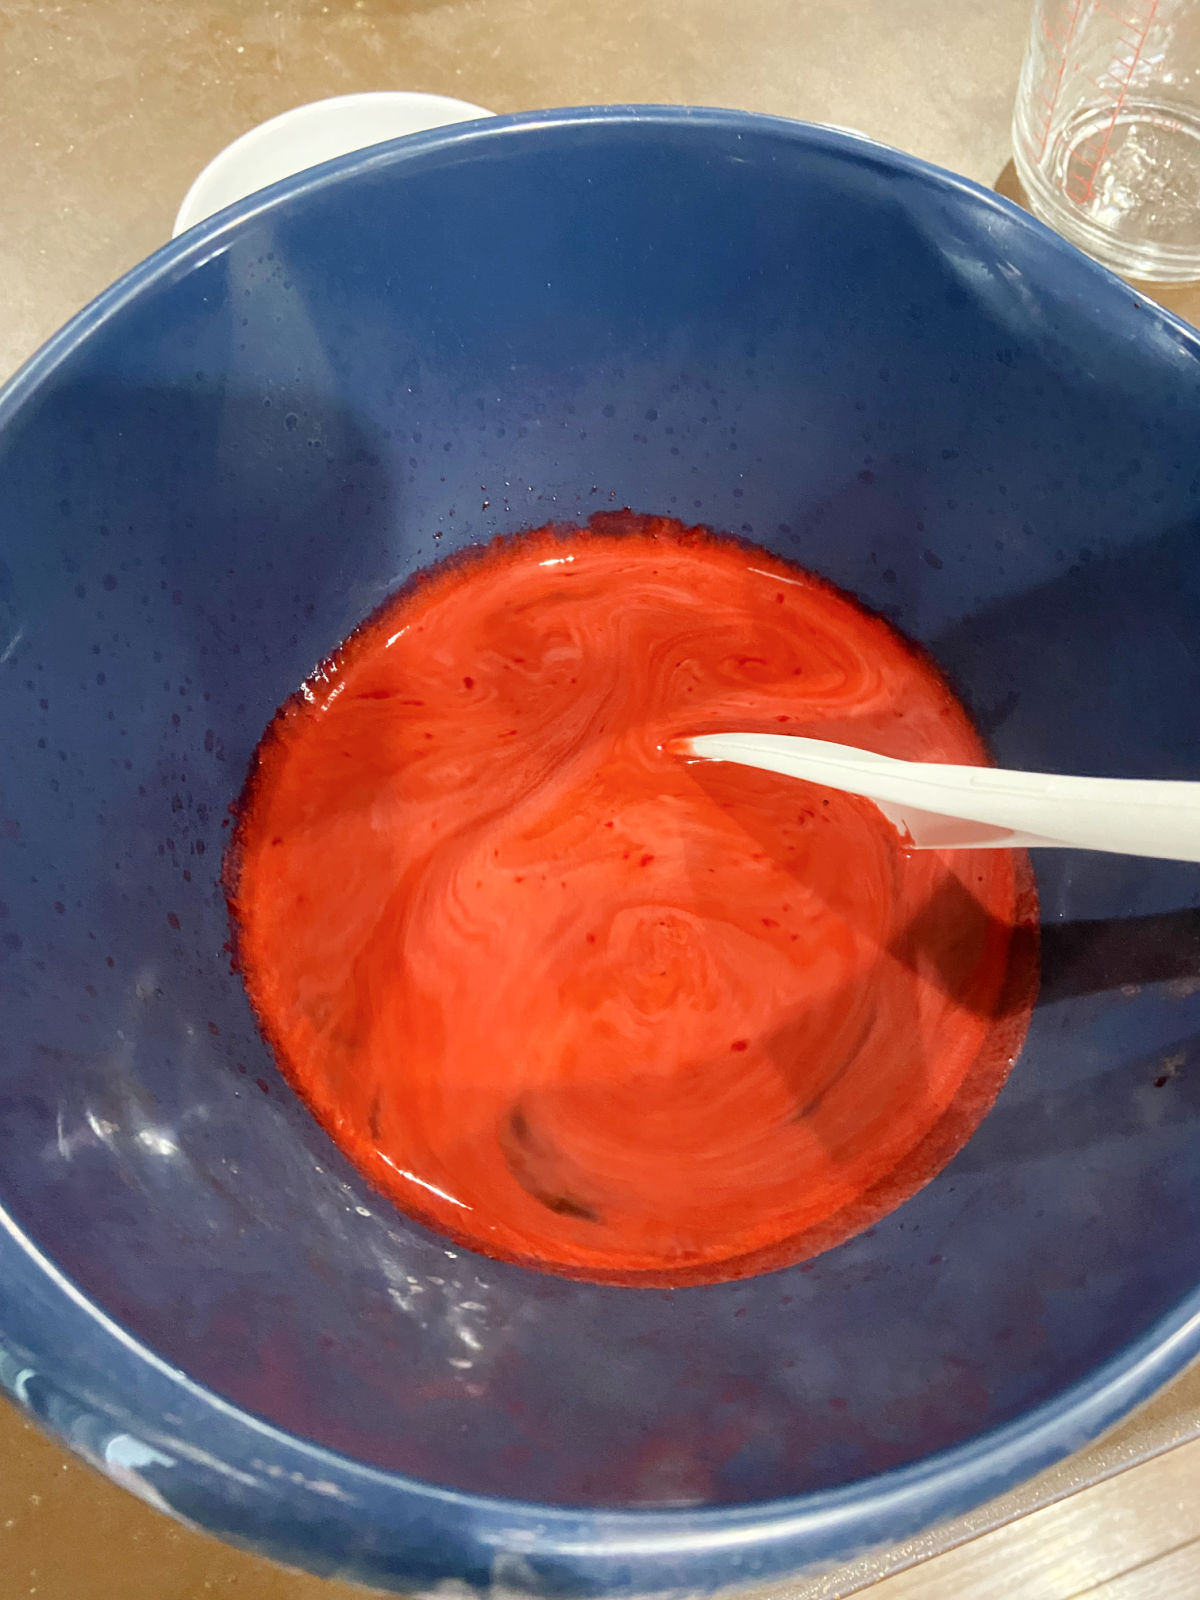 Red jello in a blue bowl. 